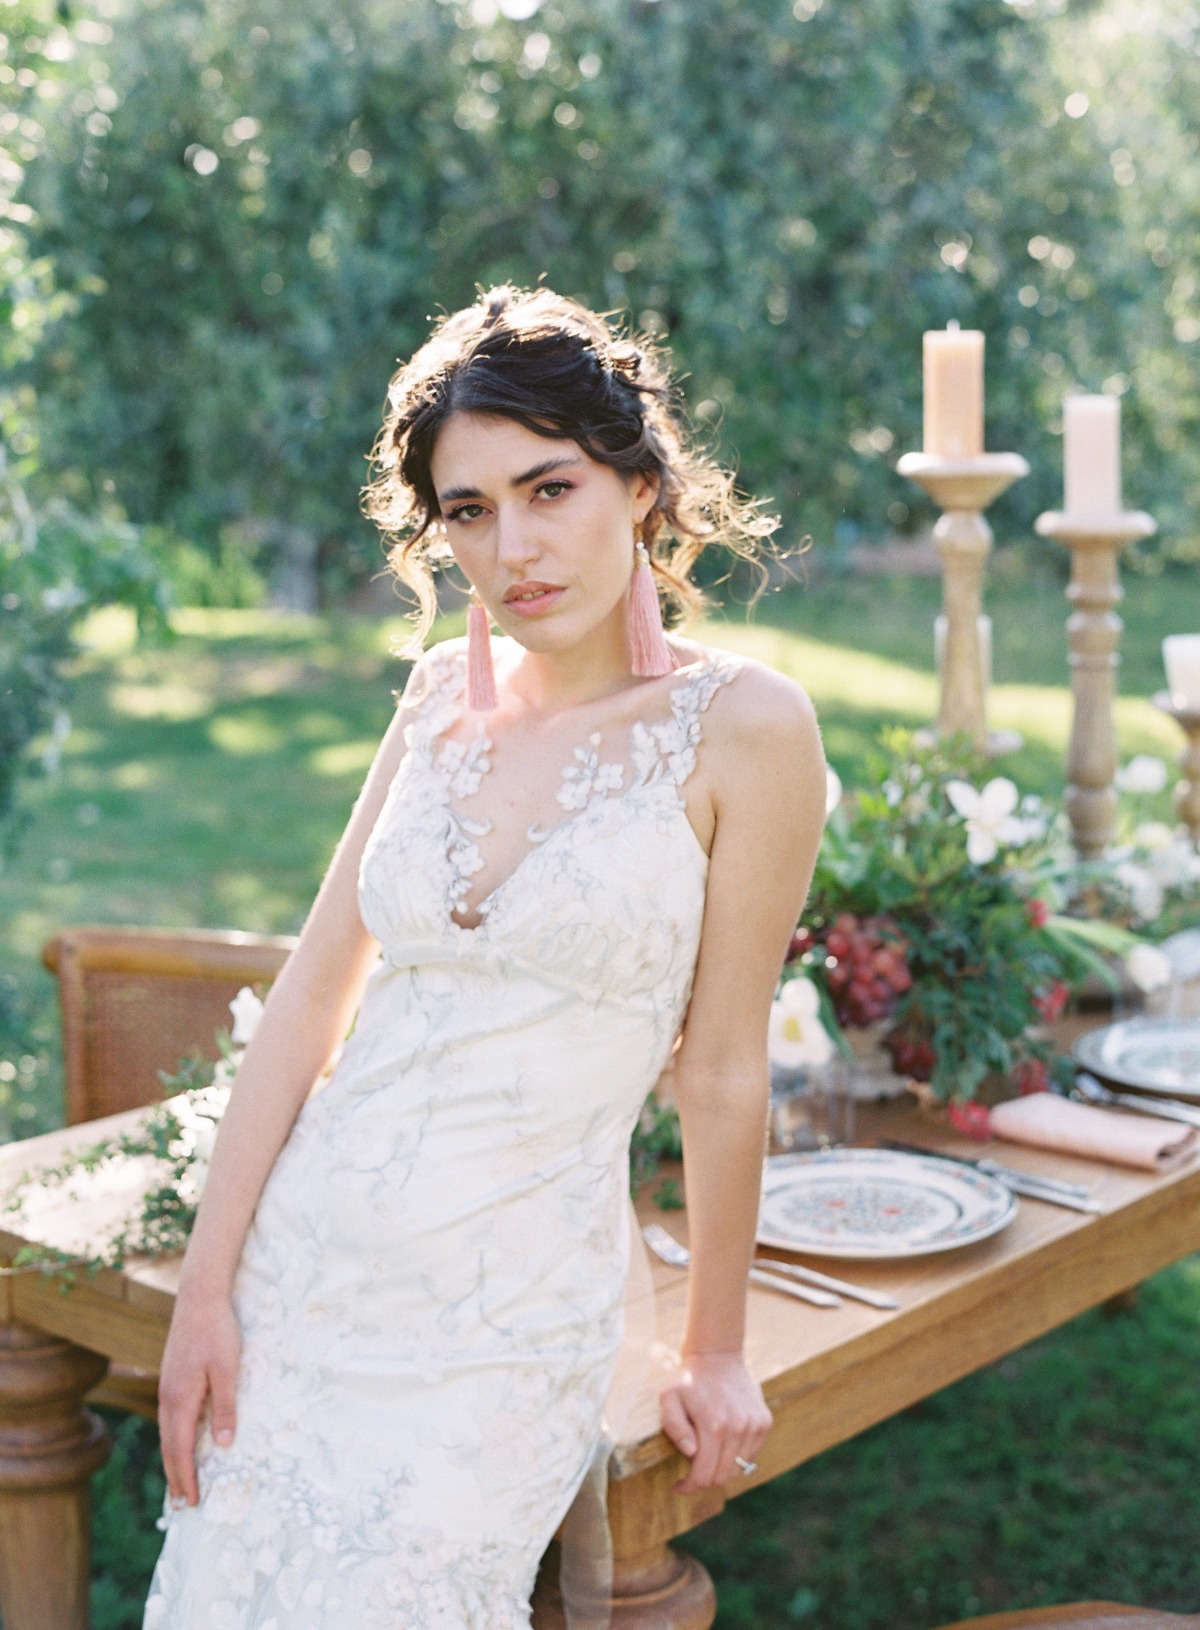 Romantic Italian bride at rustic chic reception table